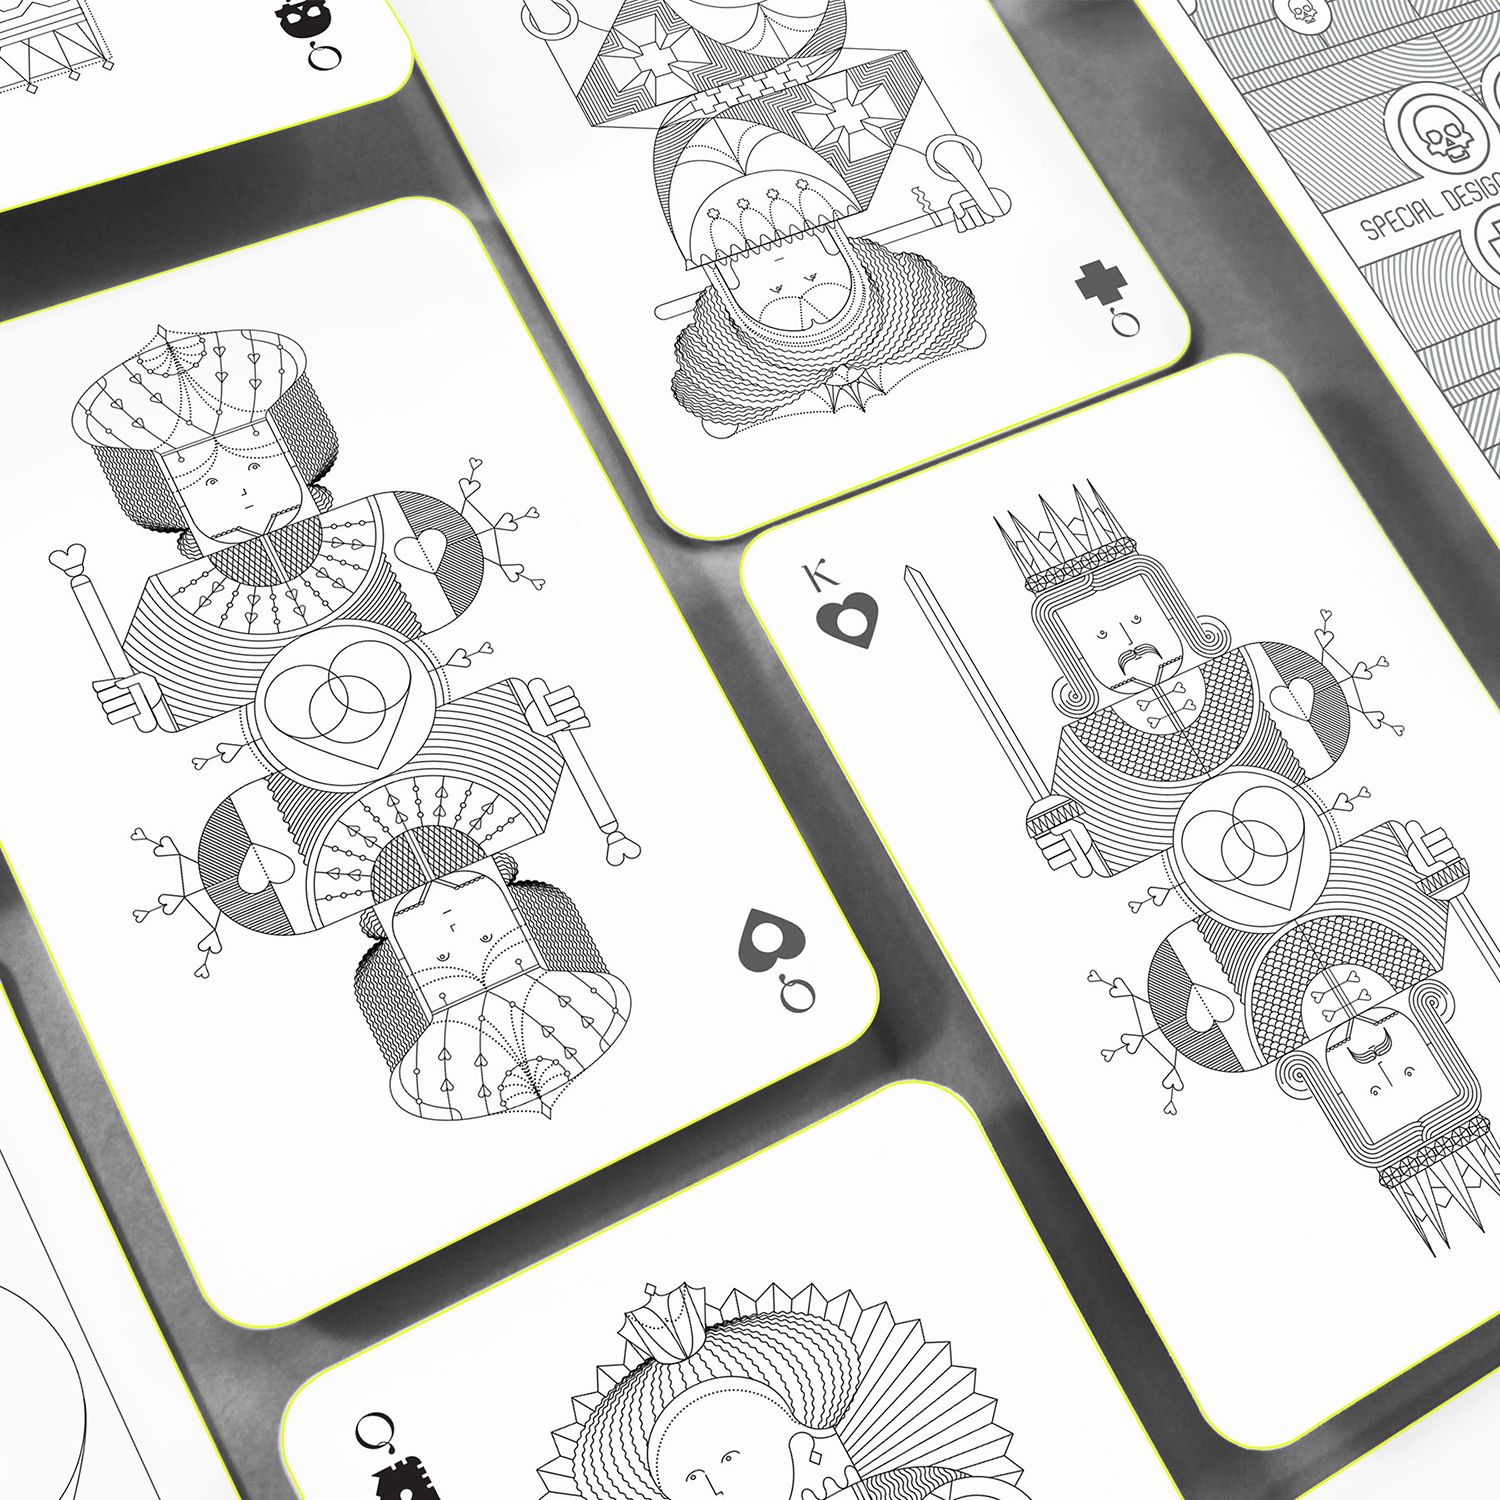 Whimsical Playing Cards by Oksal Yesilok